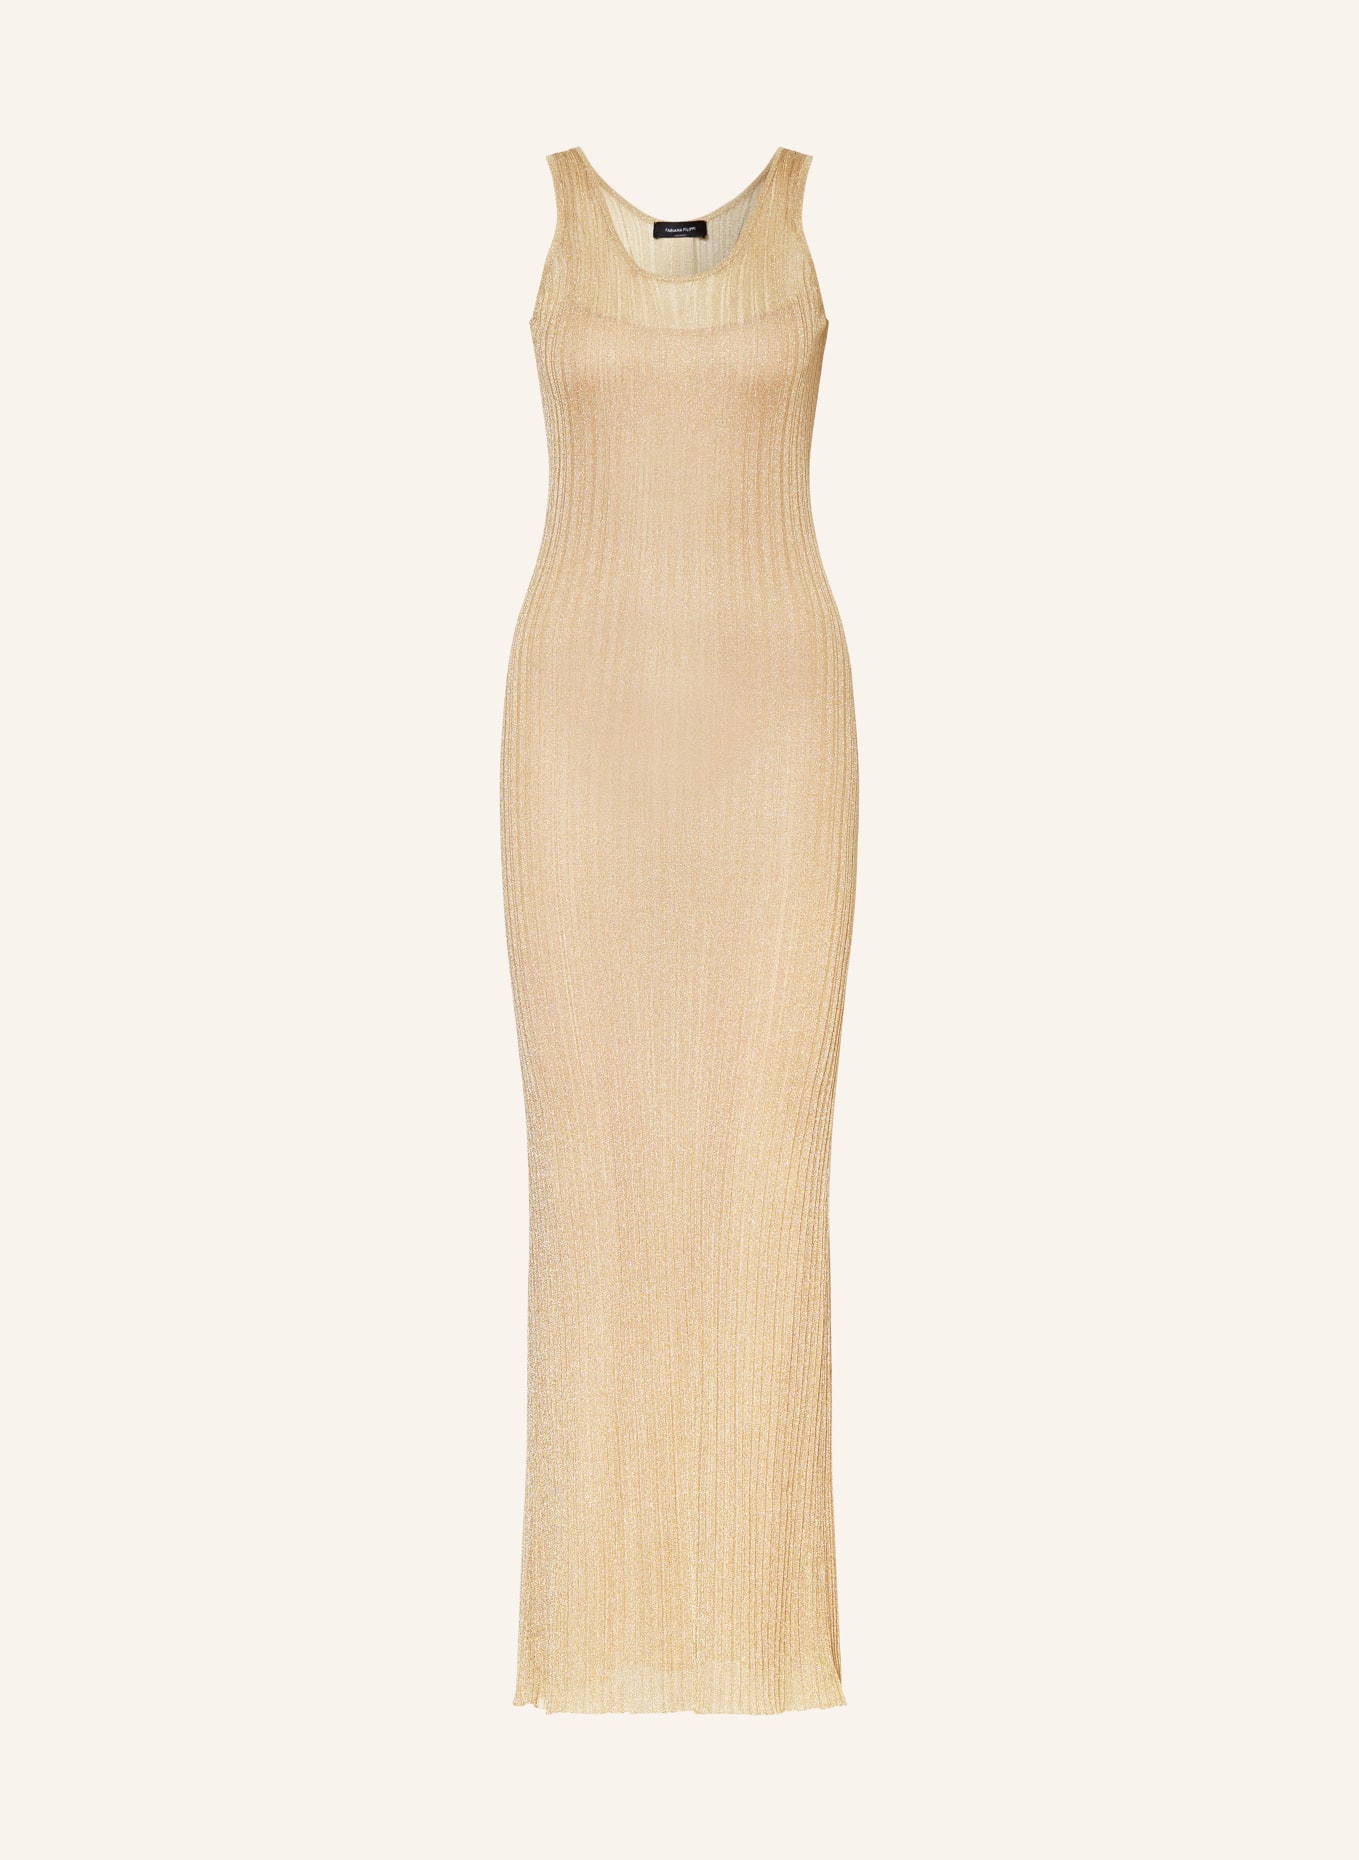 FABIANA FILIPPI Kleid mit Glitzergarn, Farbe: GOLD (Bild 1)